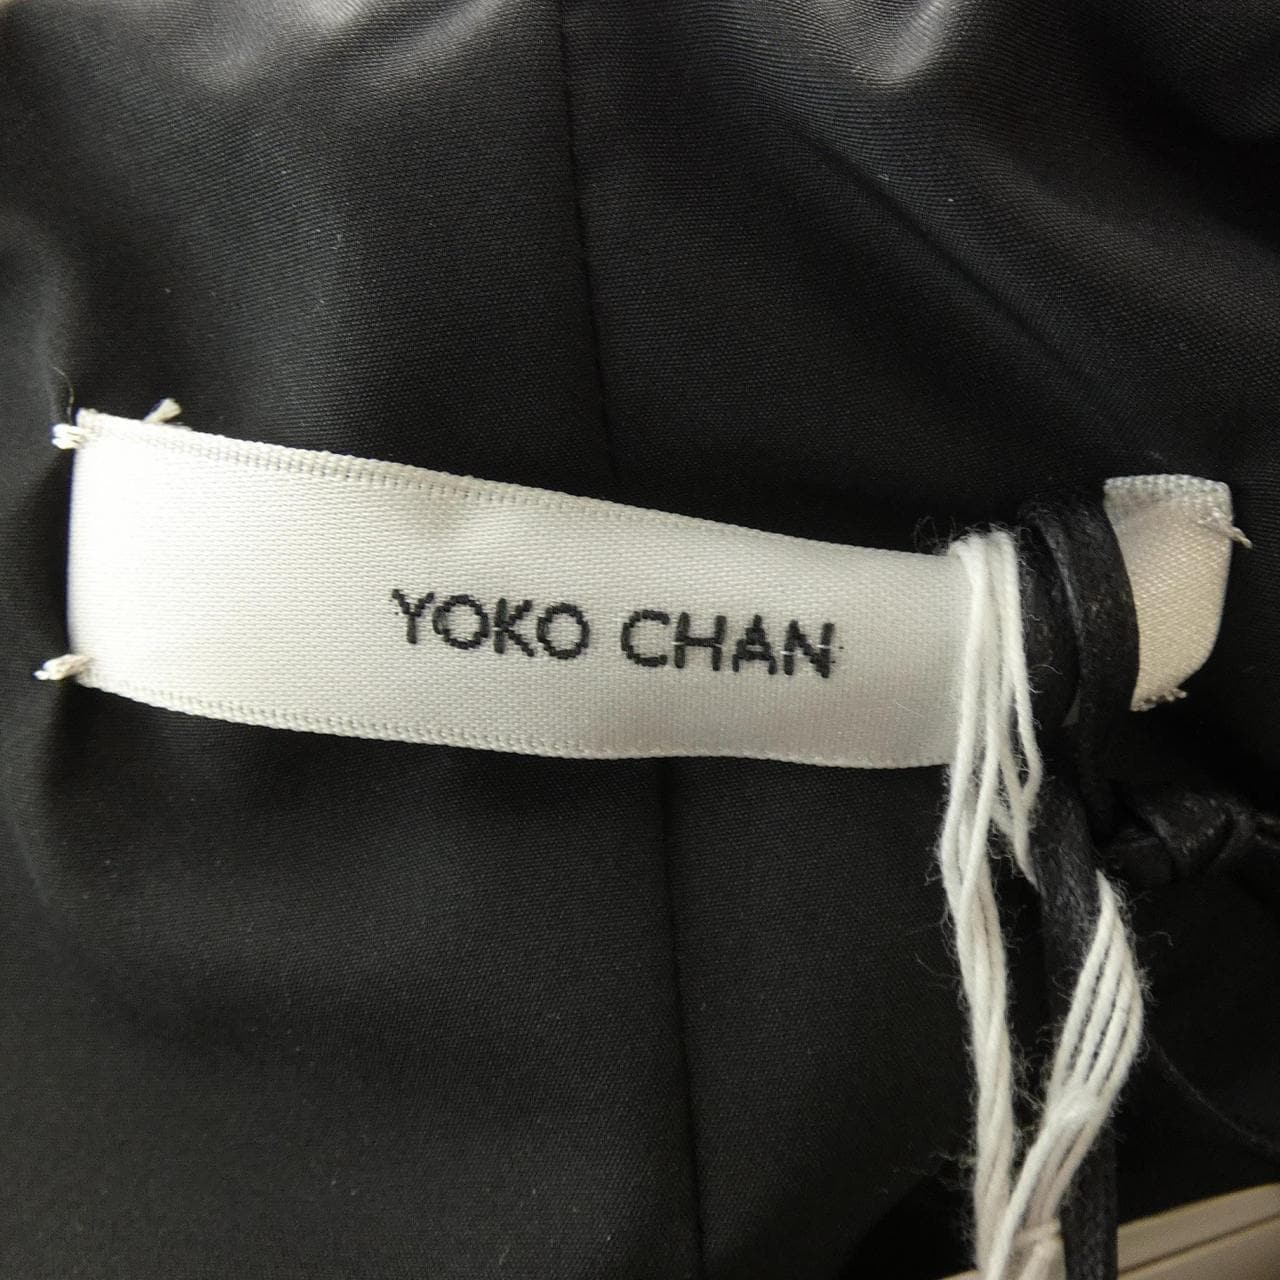 Yoko Chan YOKO CHAN coat